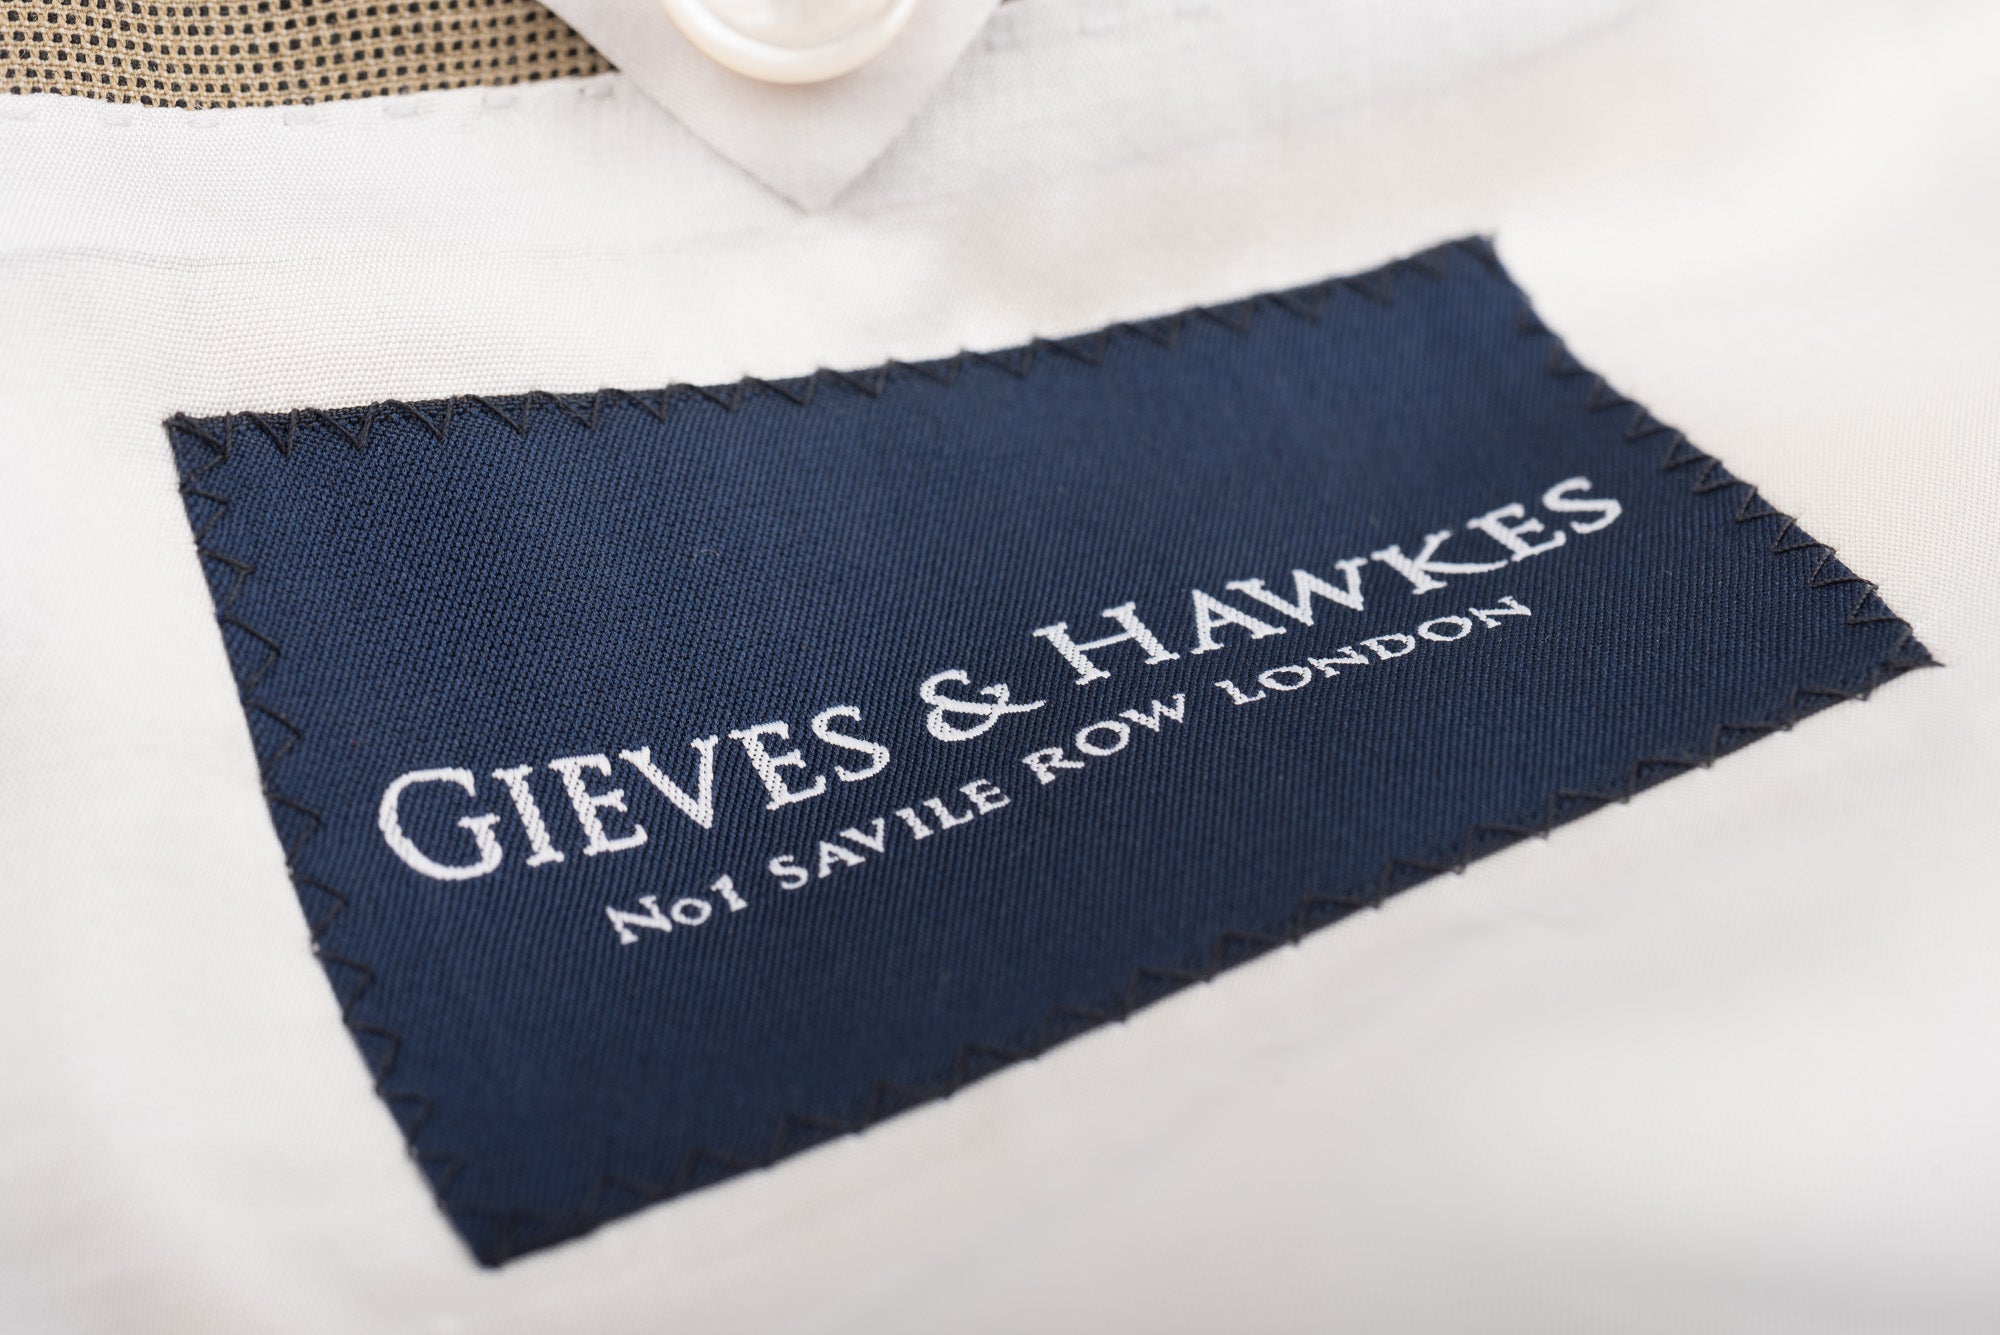 GIEVES & HAWKES Tan Nailhead Wool Super 120's Suit EU 51 NEW US 41 Long